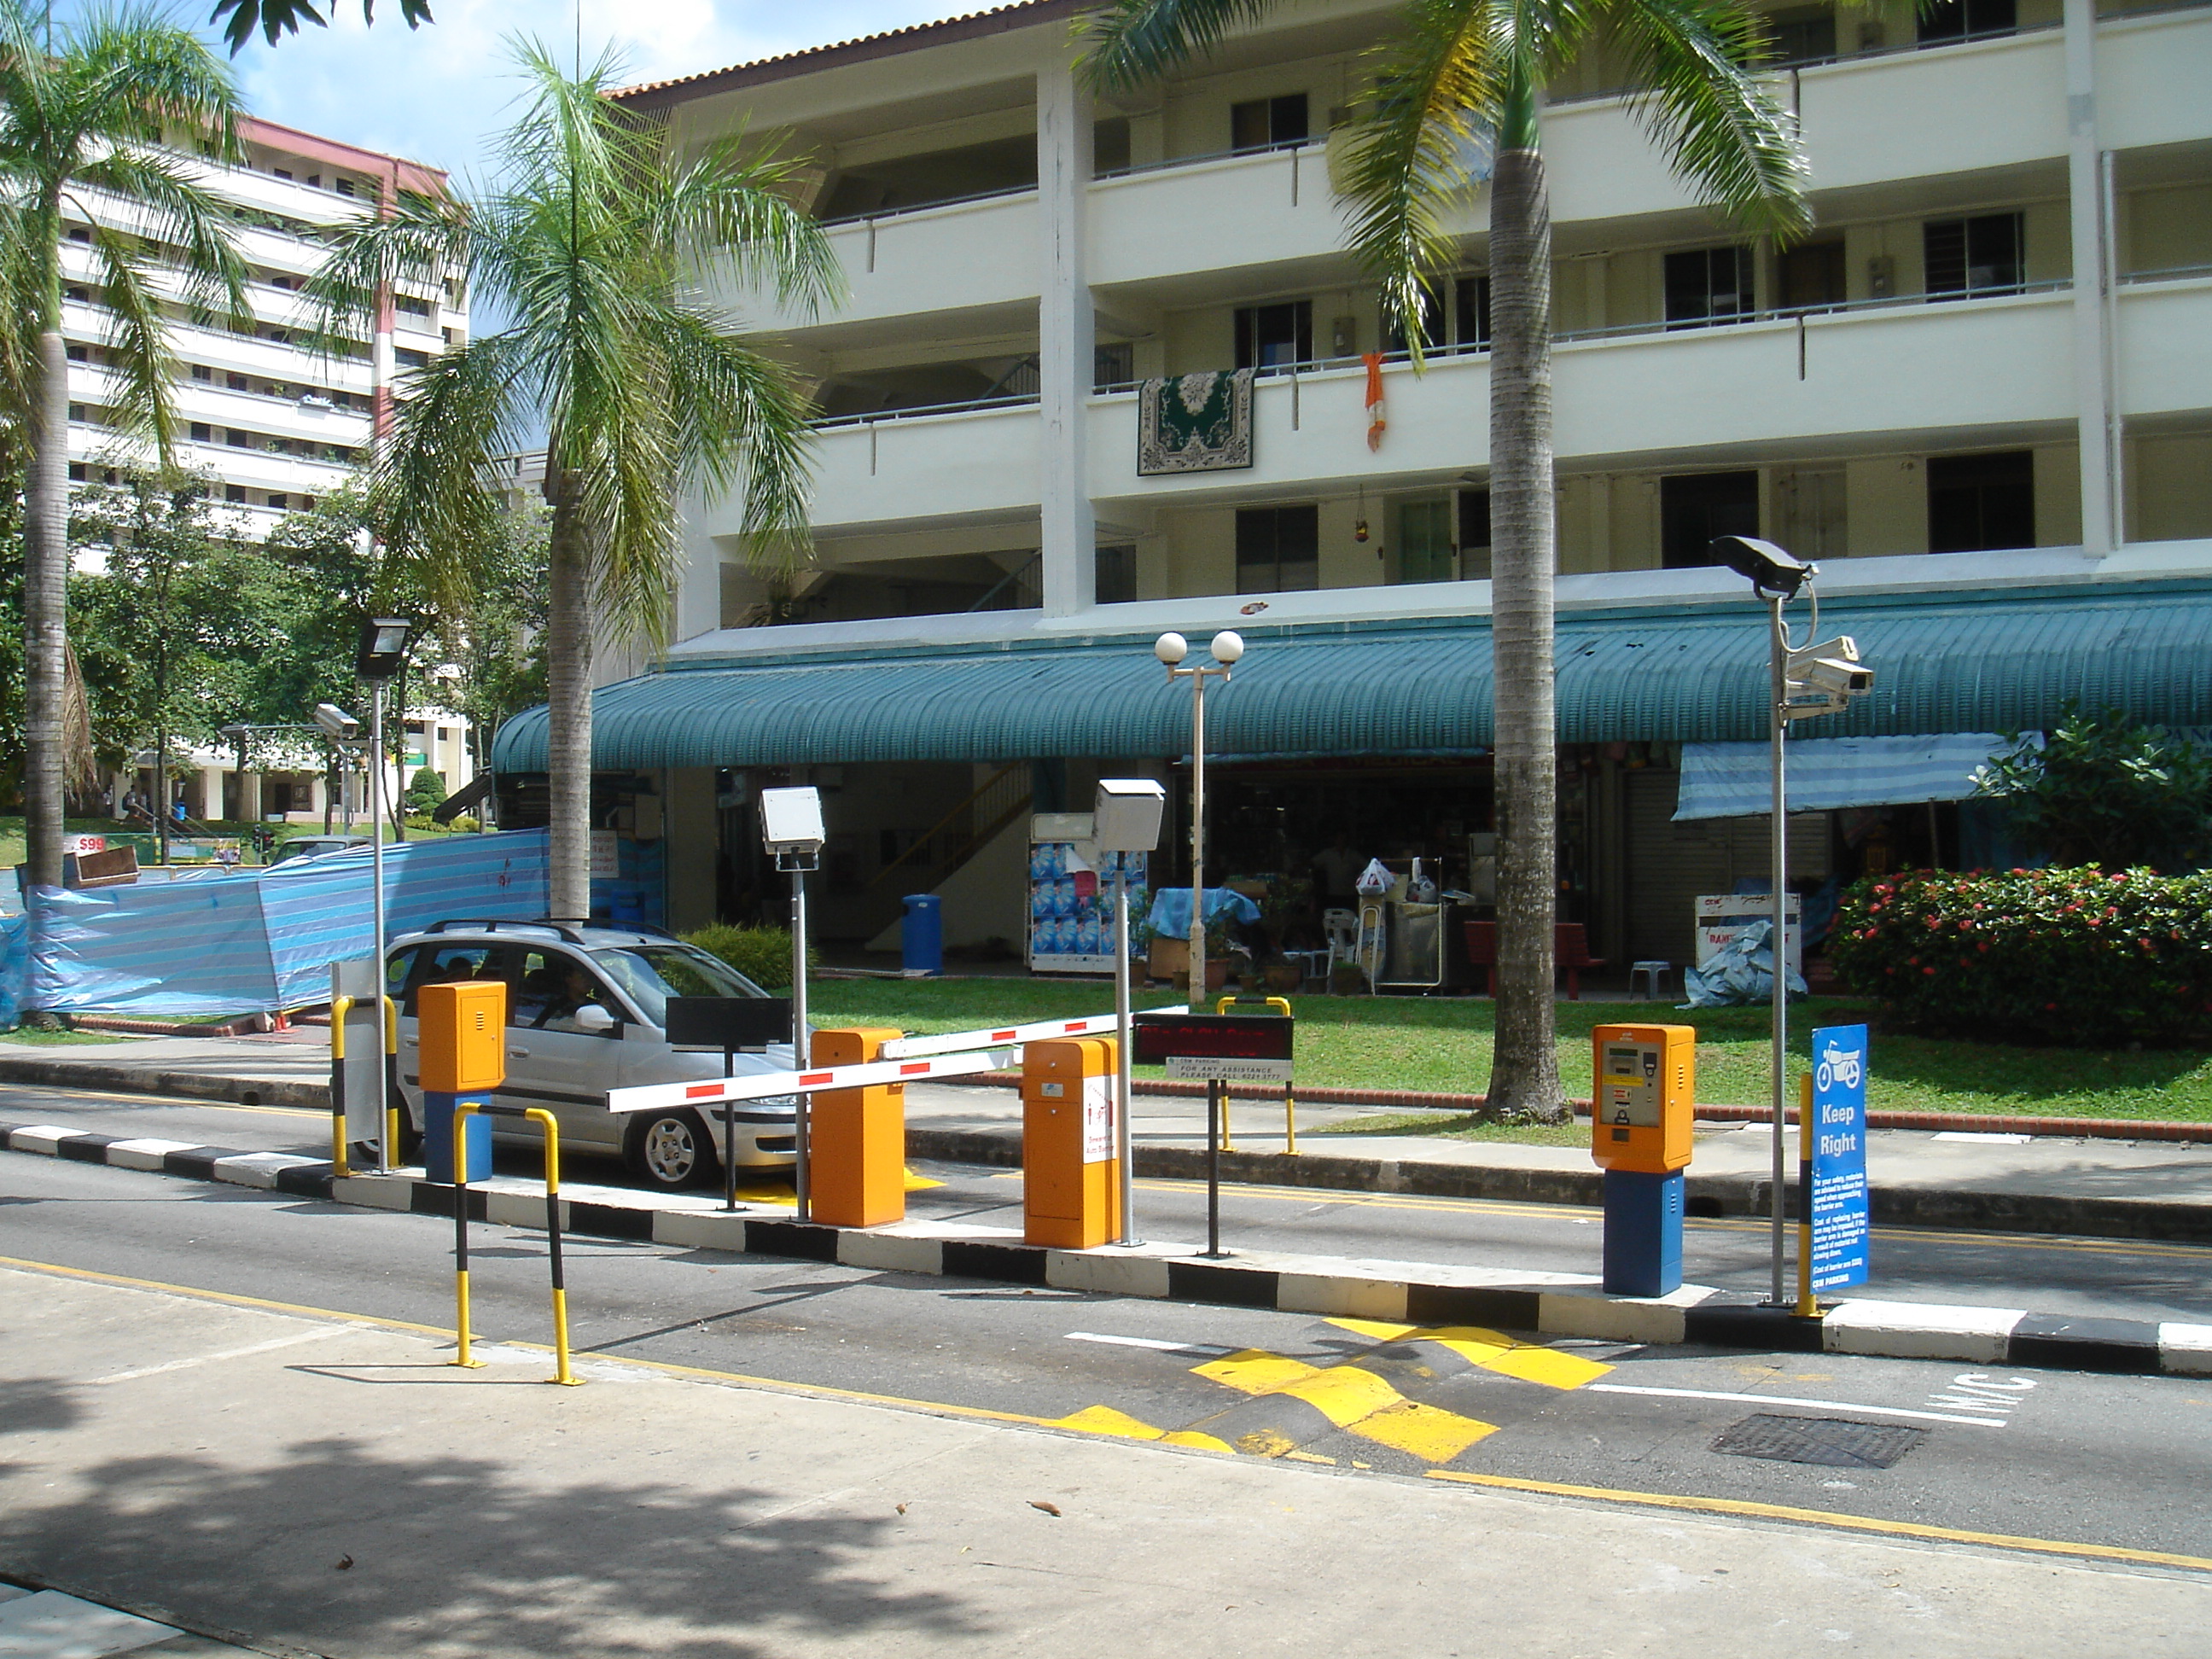 Parking.sg停车应用故障已恢复正常-热点新加坡